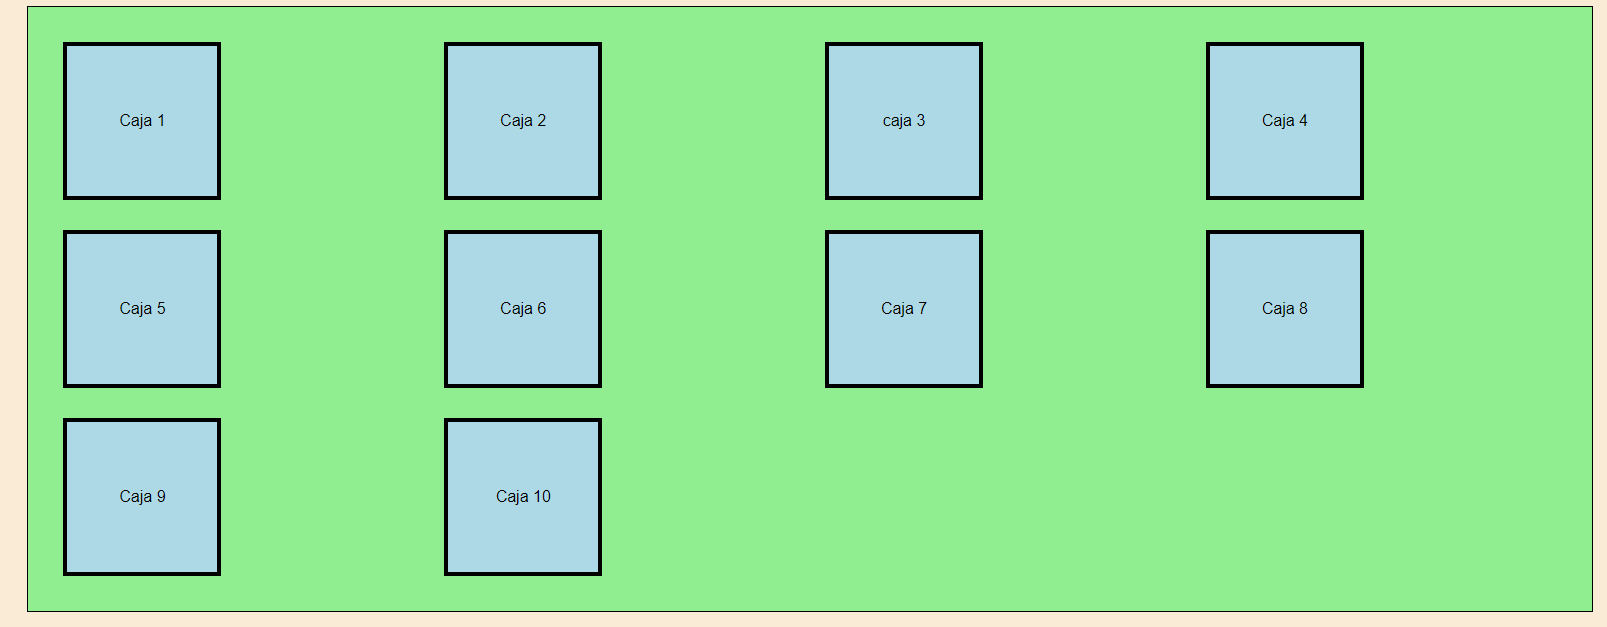 tutorial de css grid layout